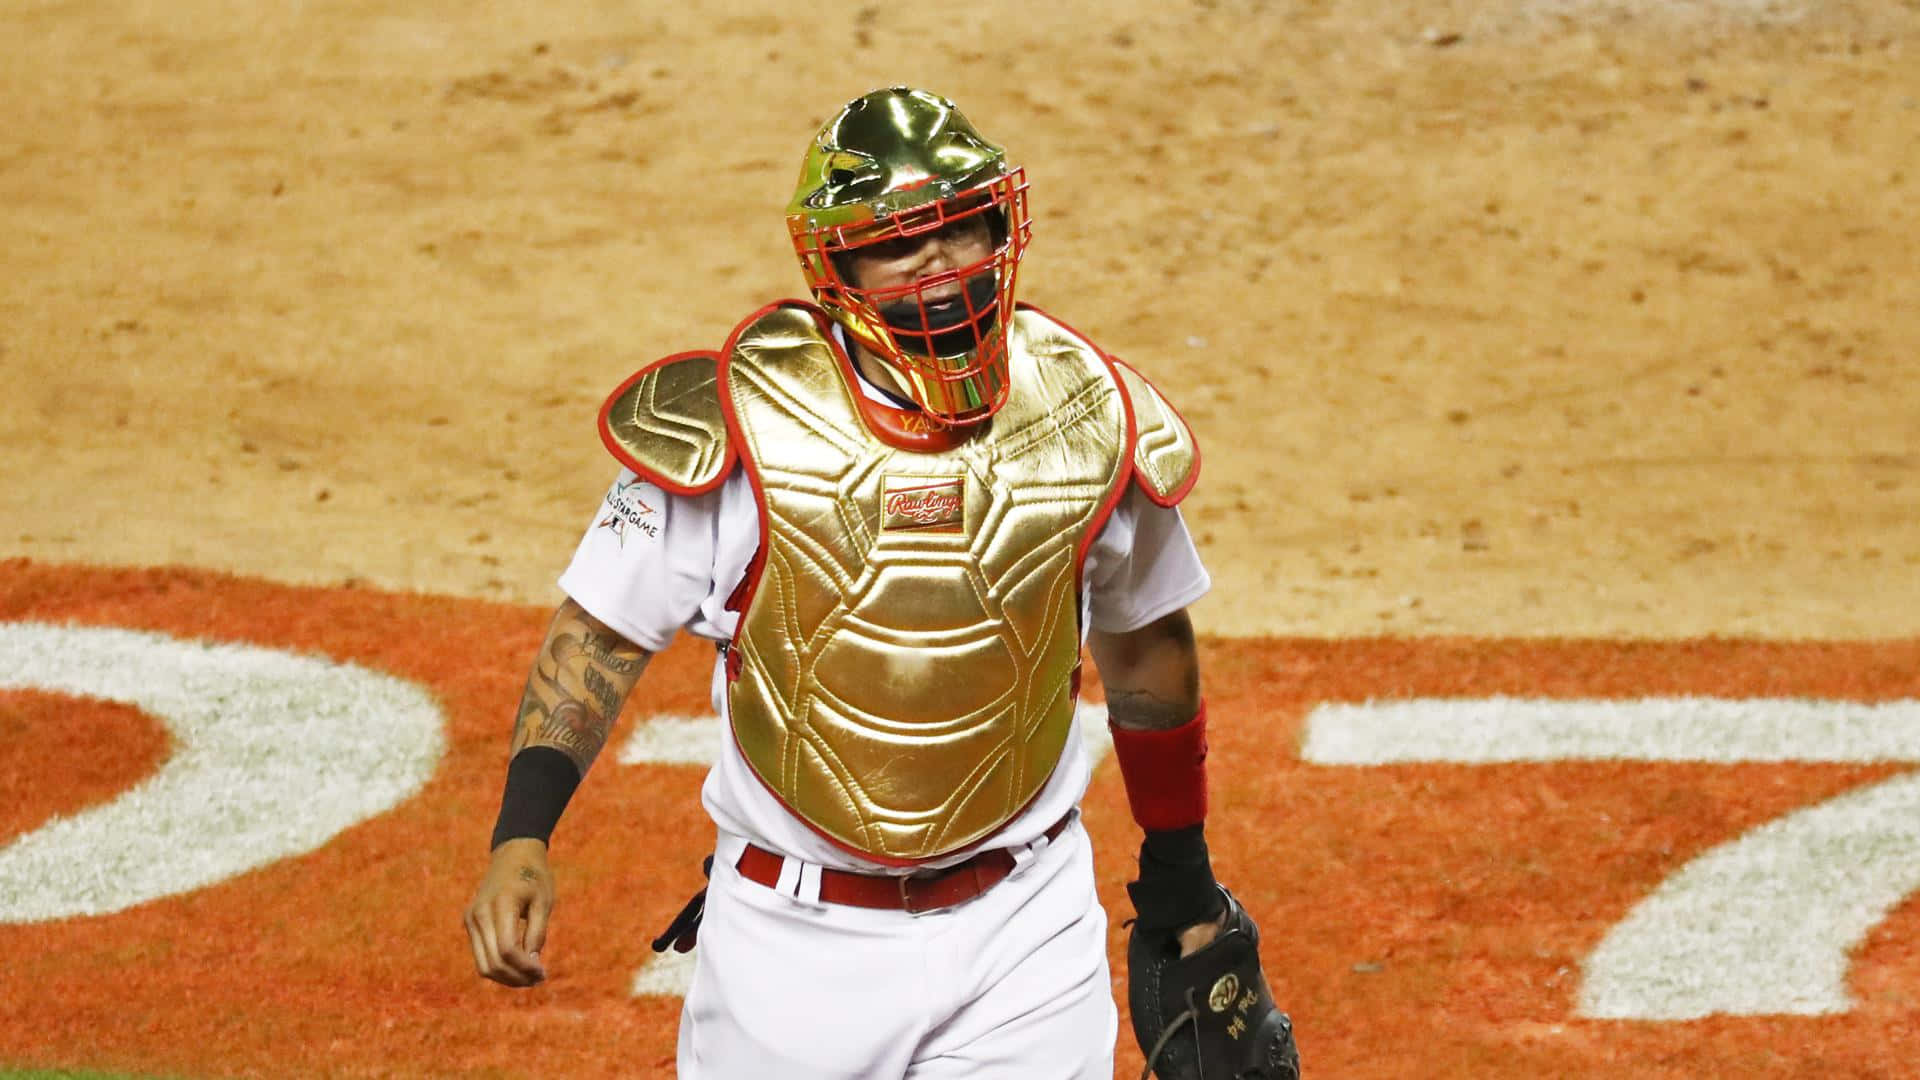 Download A Baseball Player Wearing A Gold Catchers Mask Wallpaper